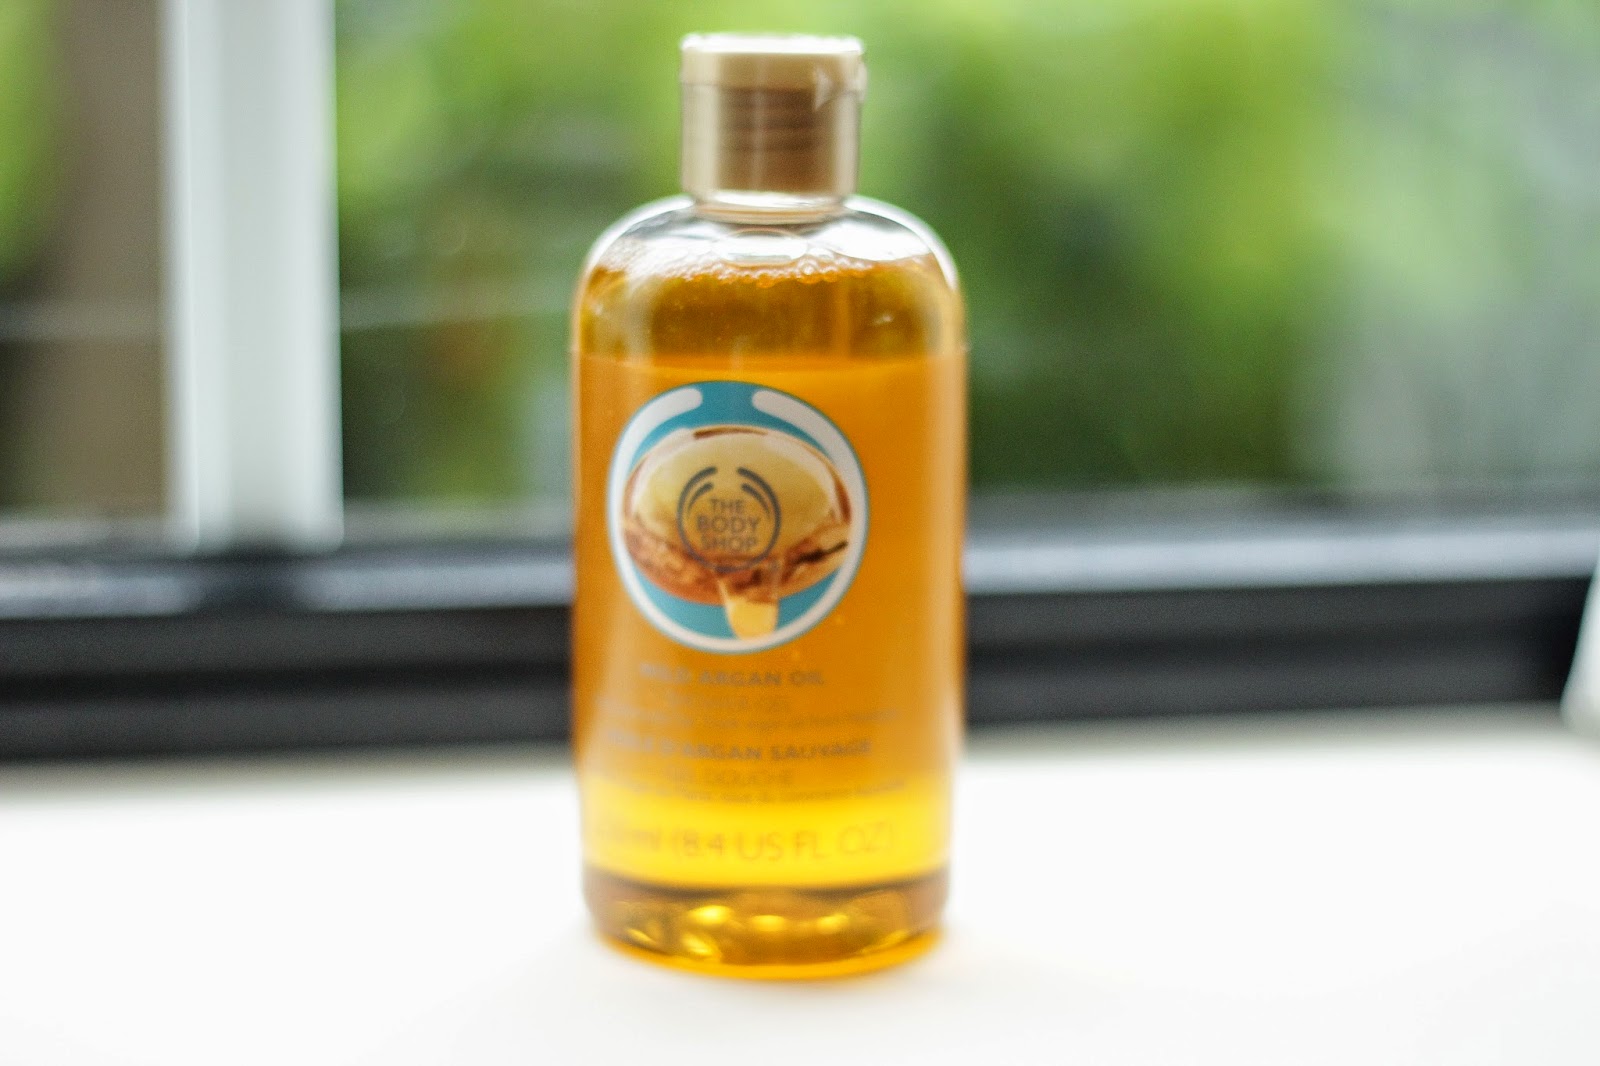 the body shop wild argan oil shower gel review